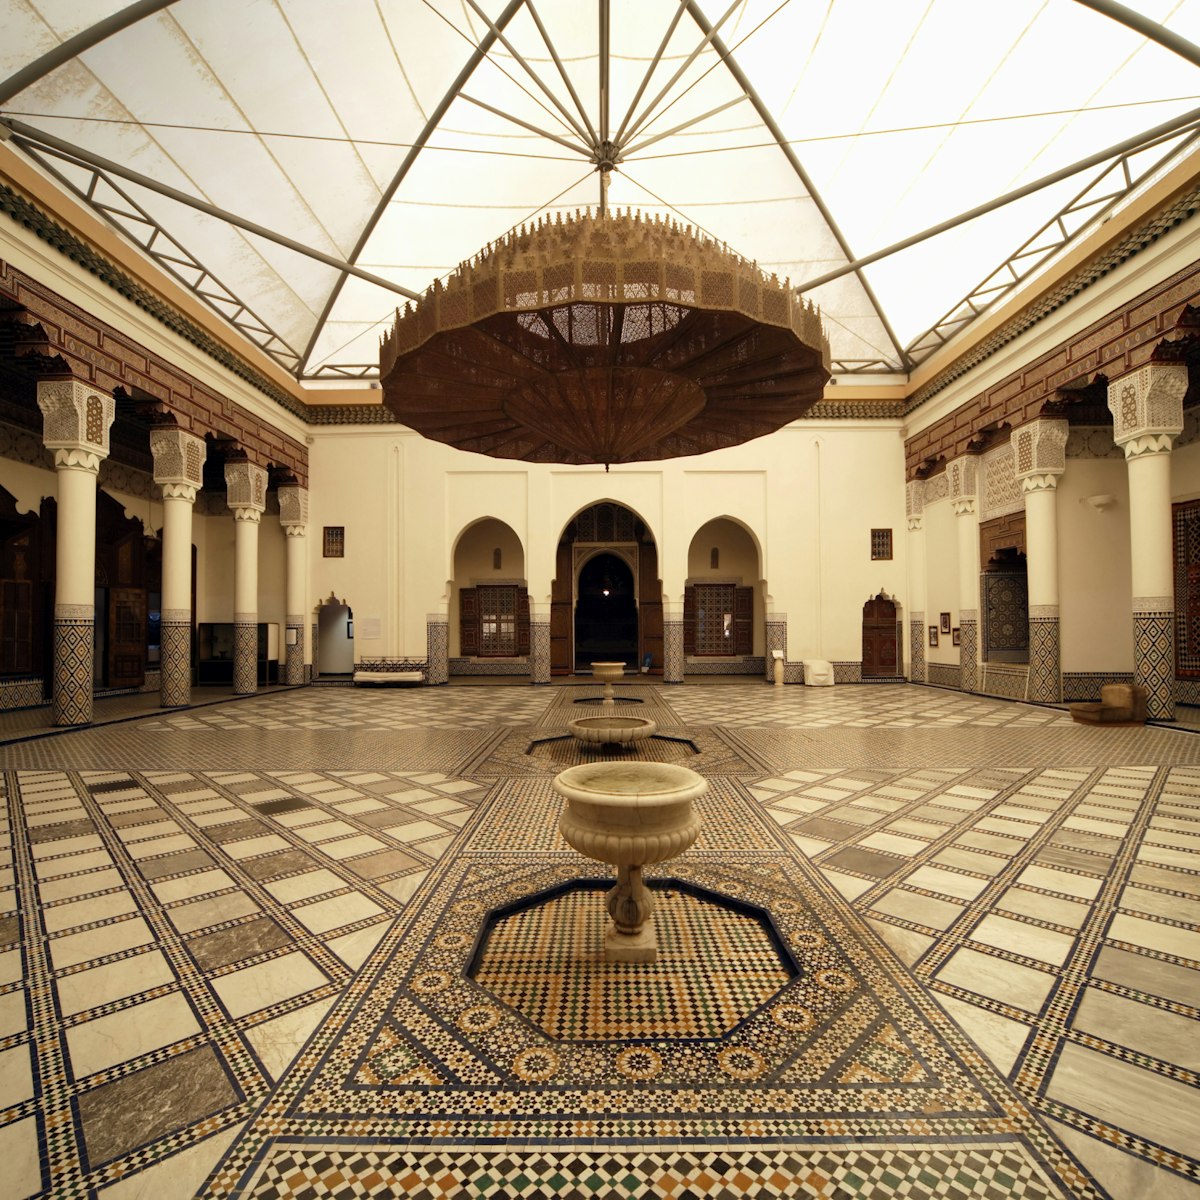 Morocco, Marrakesh, Museum of Marrakesh, central courtyard